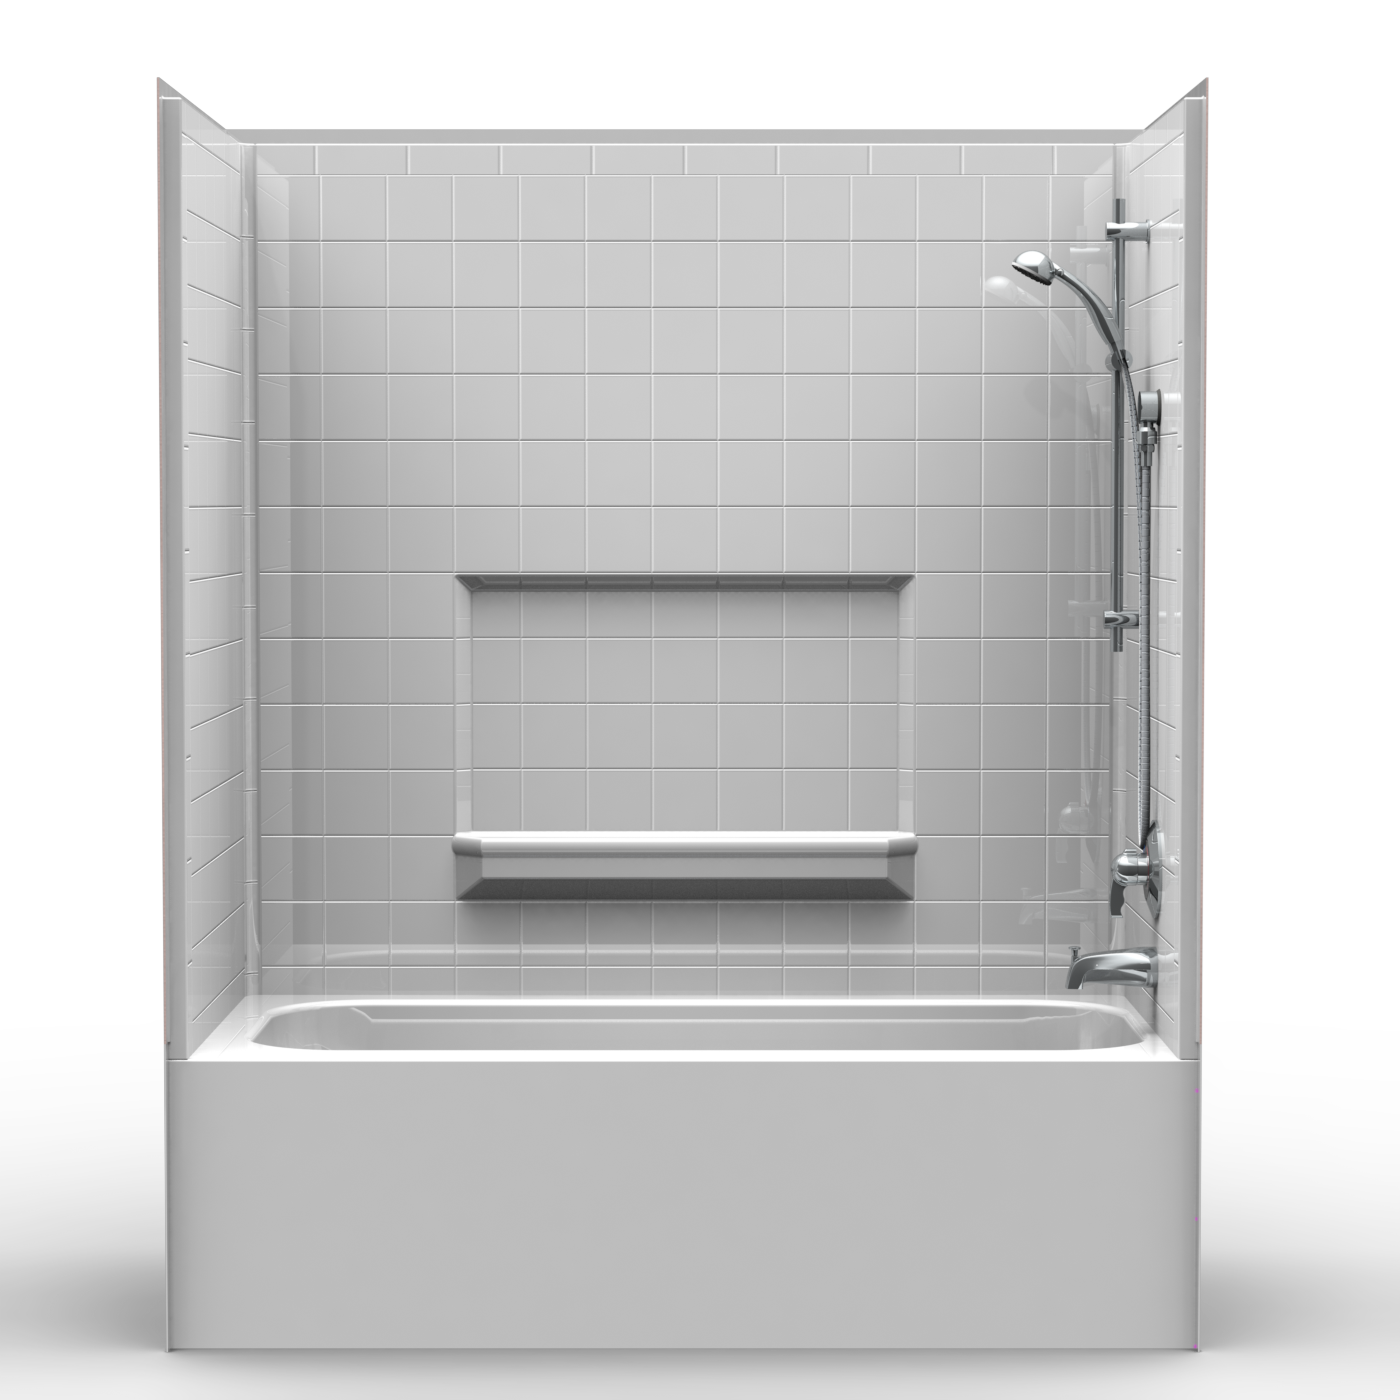 Single Piece Tub Shower 60 X 32 72, Curved Bathtub Shower Combo